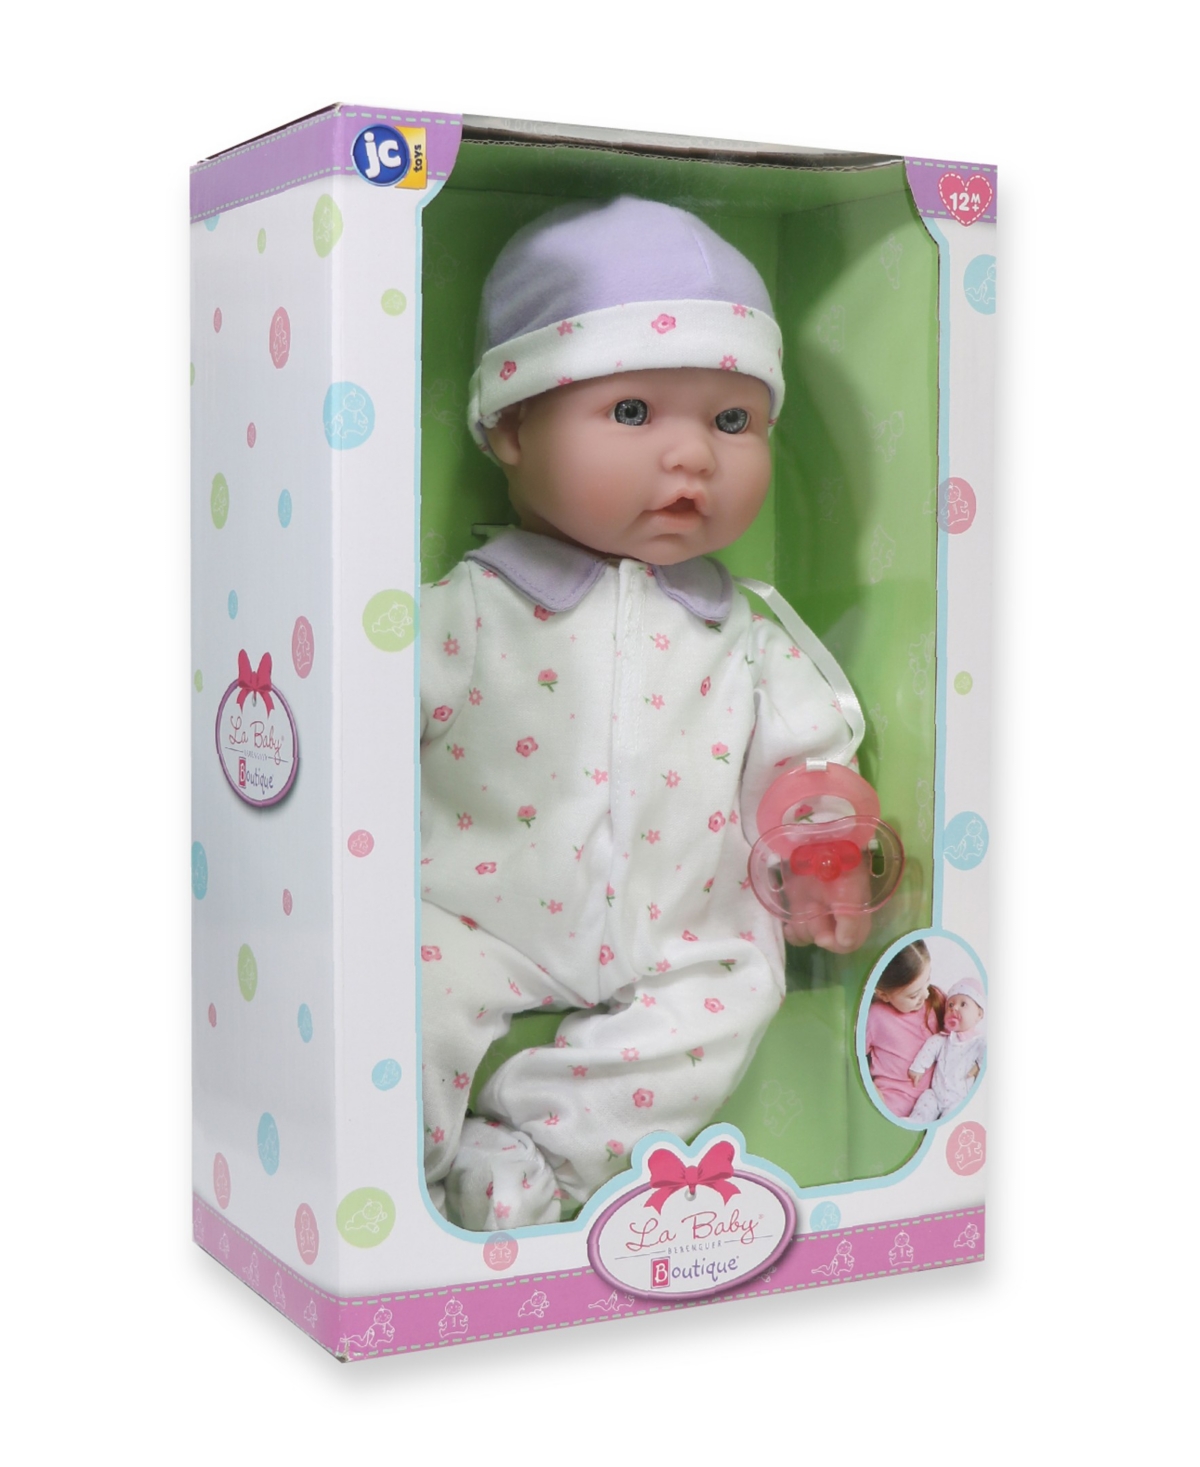 Shop Jc Toys La Baby Caucasian 16" Soft Body Baby Doll Purple Outfit